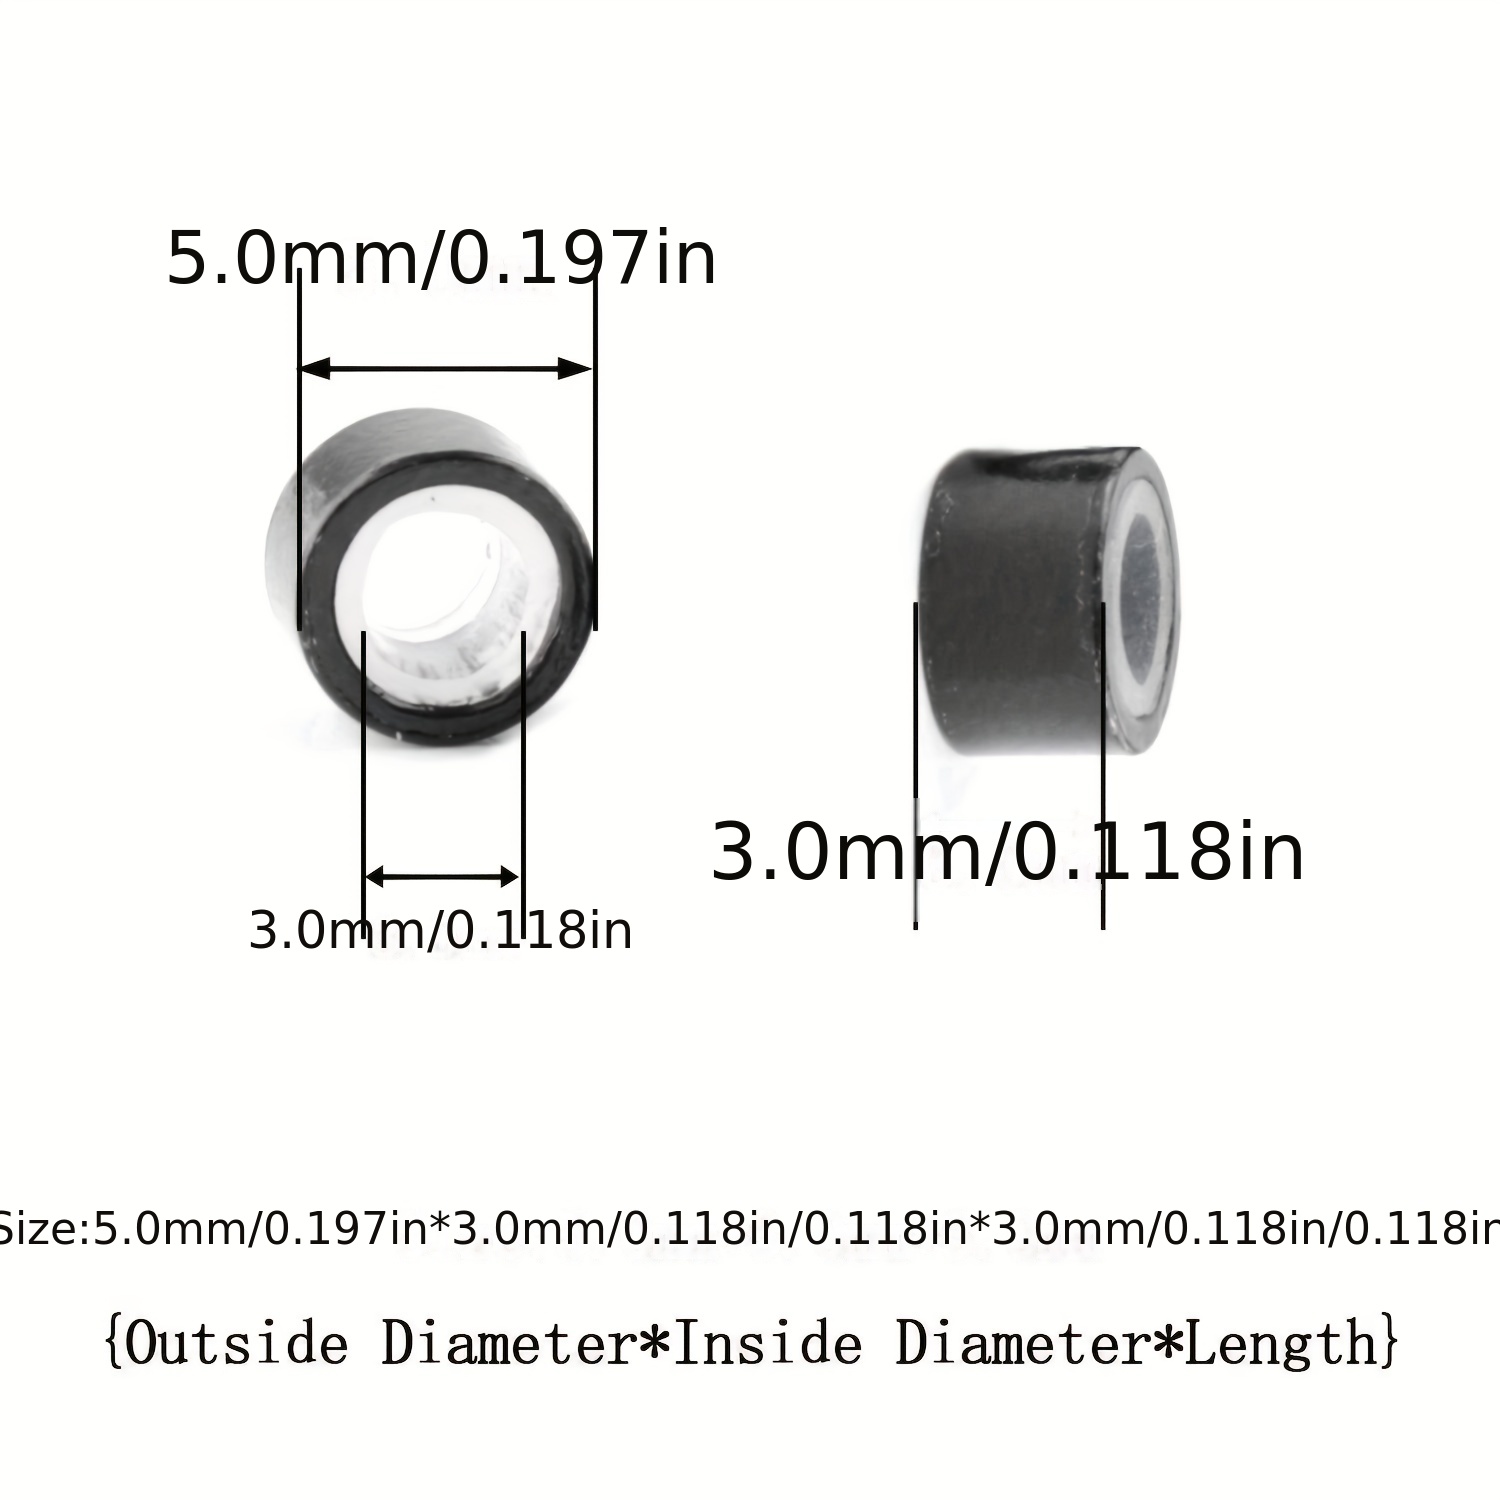 Premium Silicone Micro Link Rings Beads For Hair Extensions  (500Pcs,Black/Brown/Dark Brown)